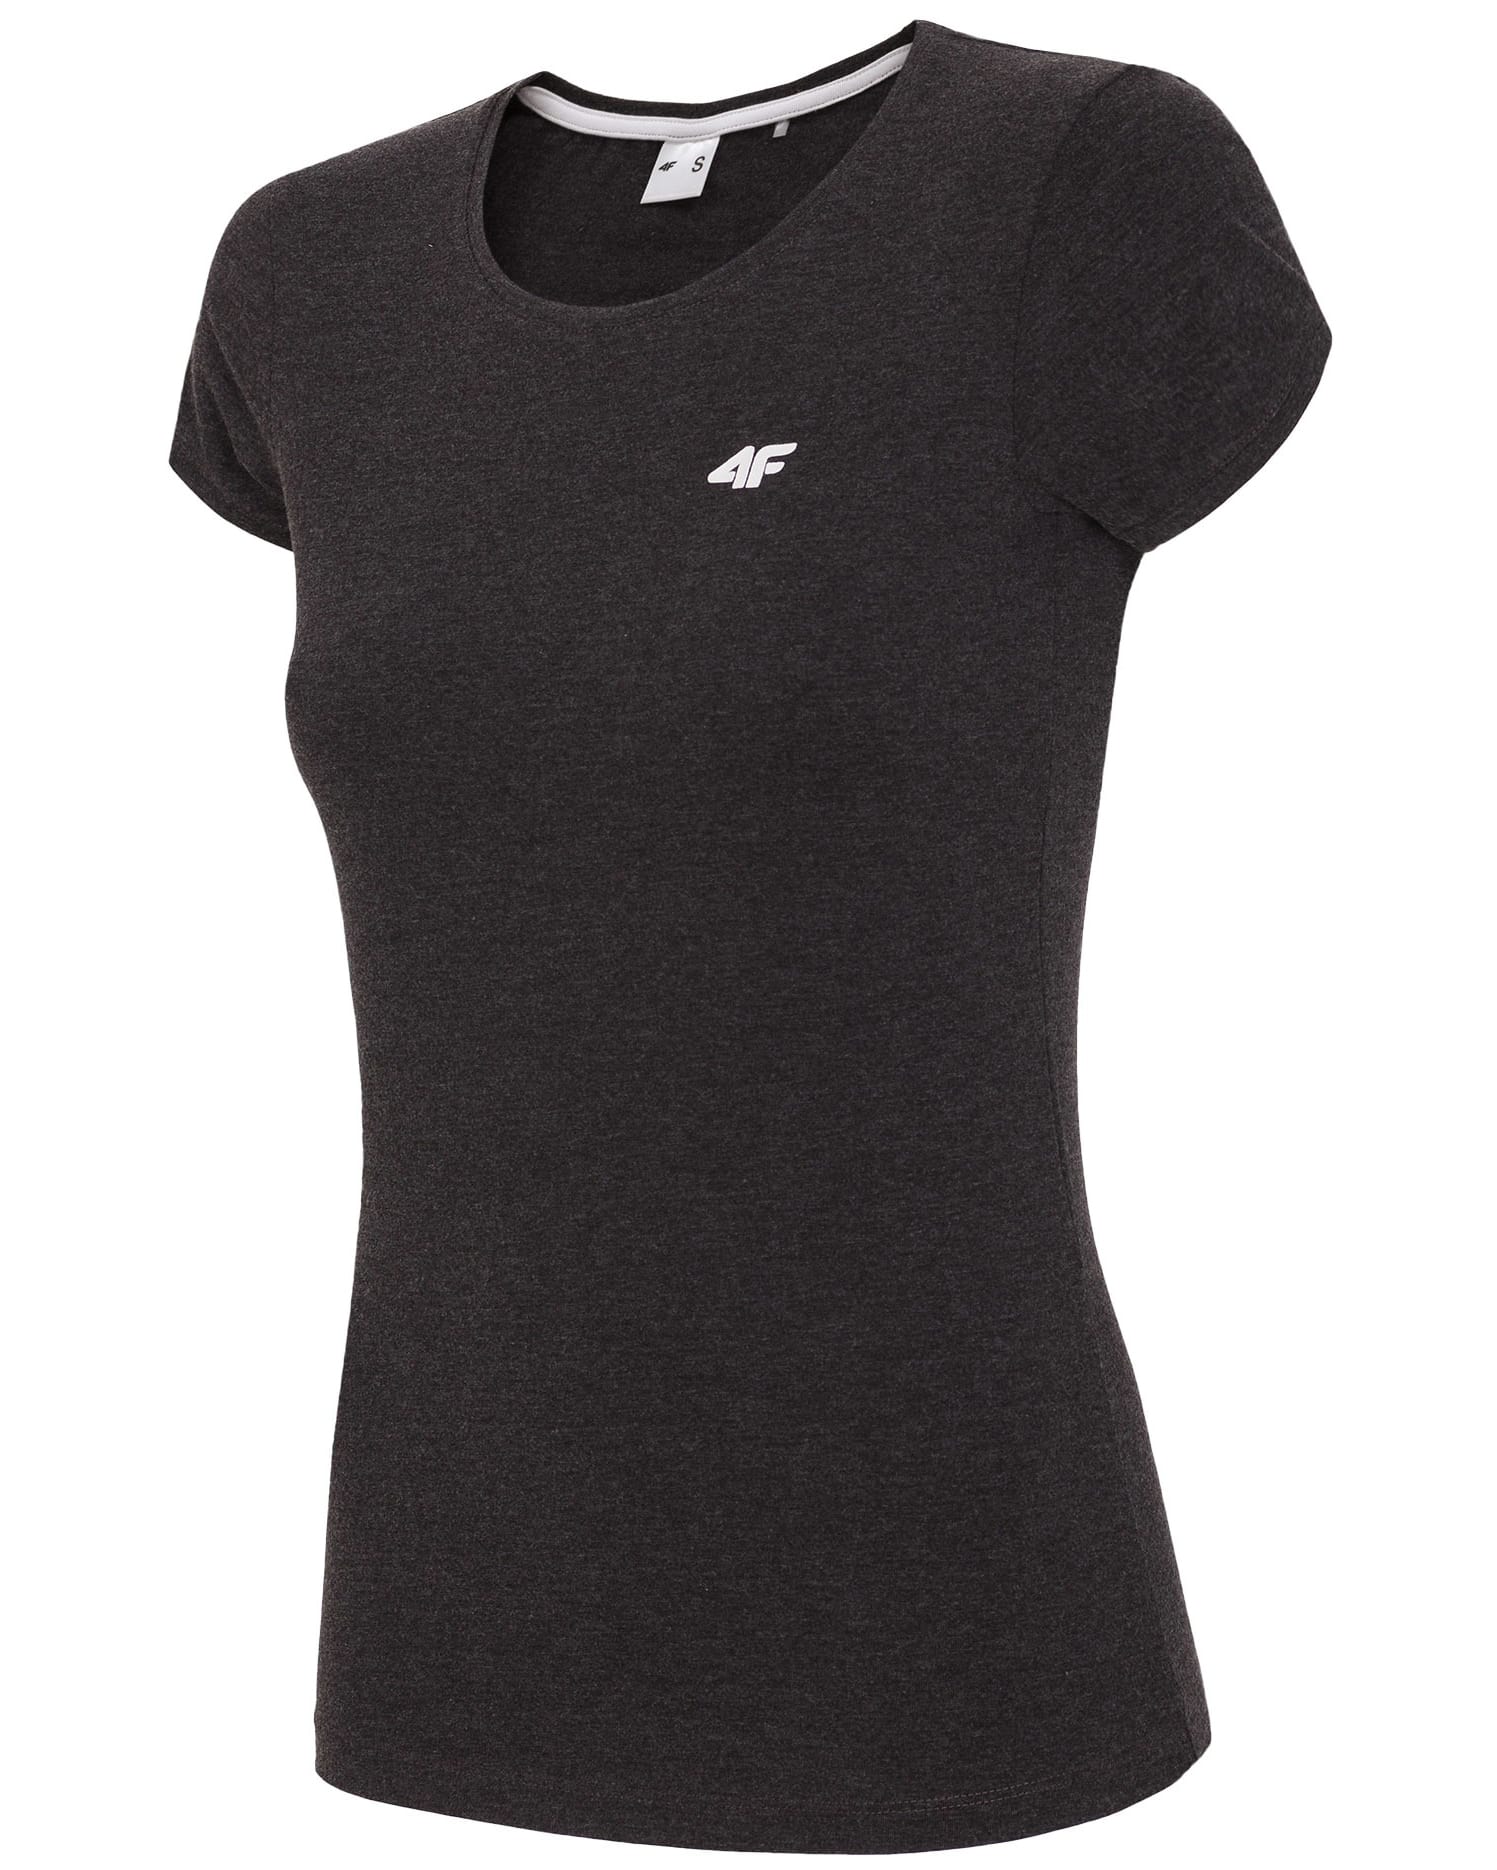 4F Women's T-Shirt - Dark Grey Melange